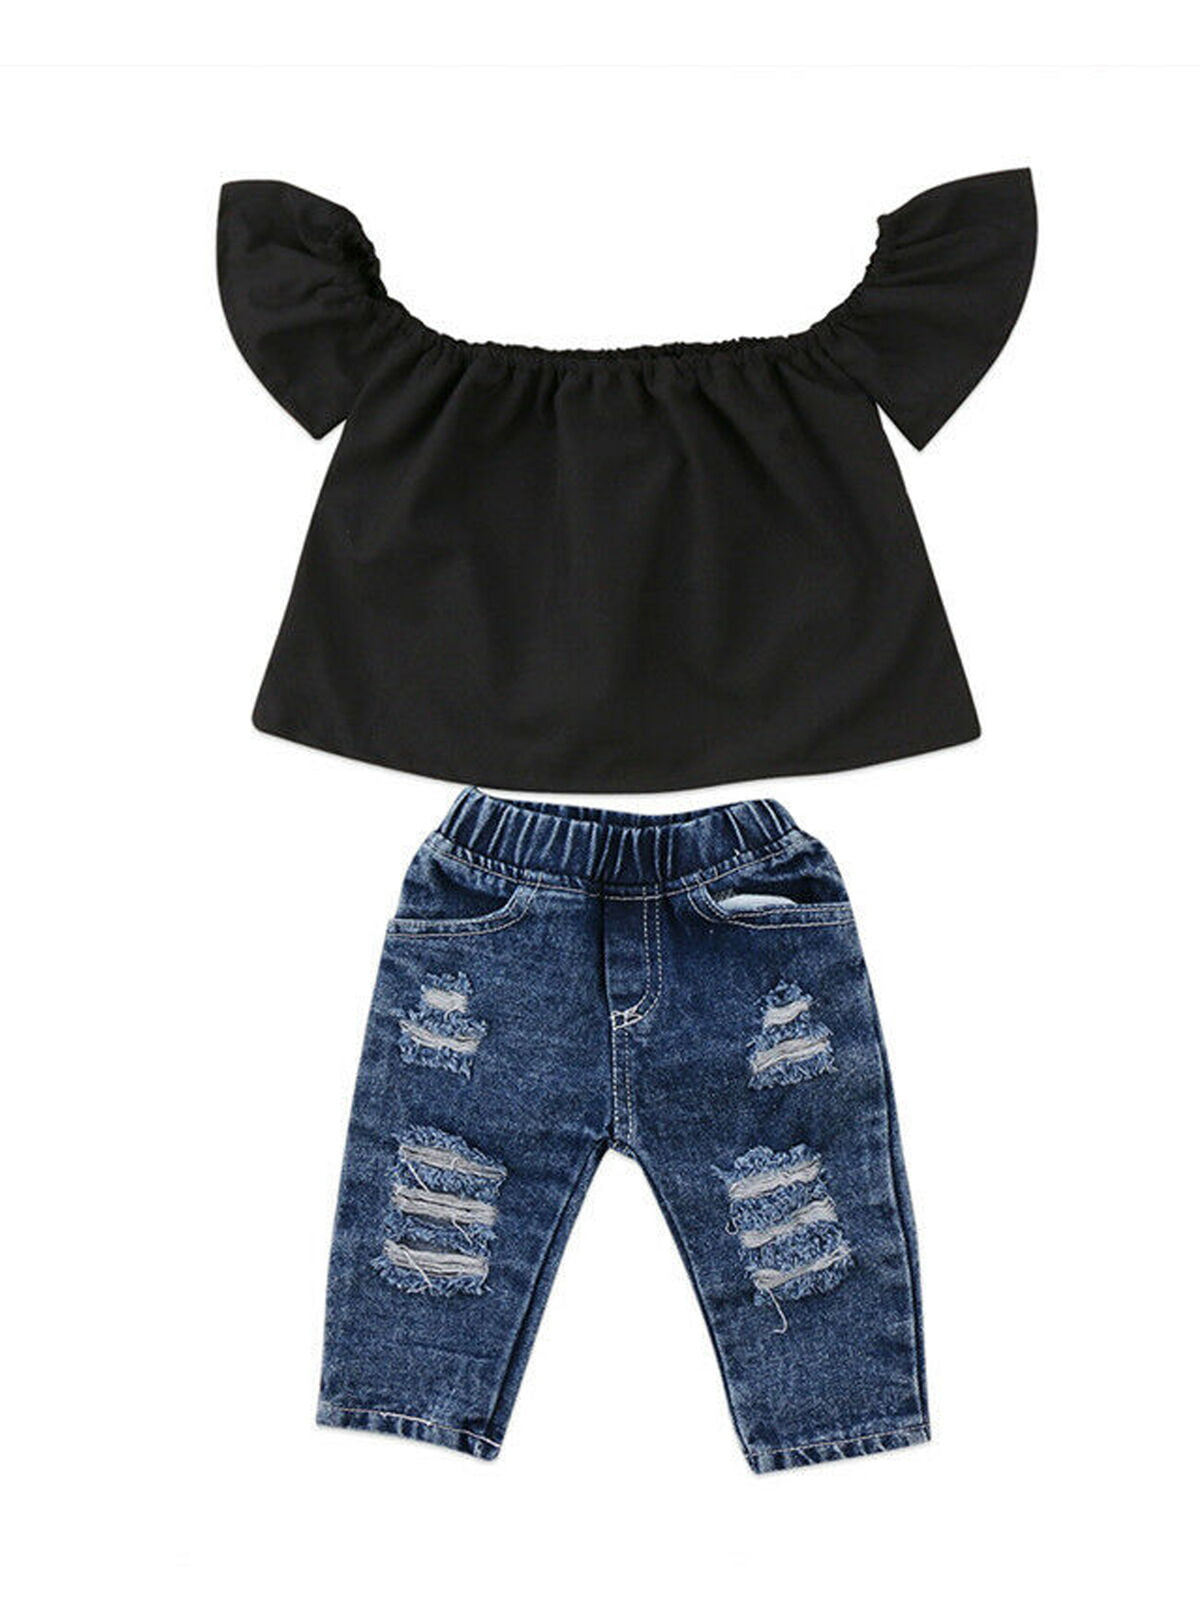 Hirigin Toddler Kids Baby Girls Denim Hot Pants Jeans Outfit Clothes Set